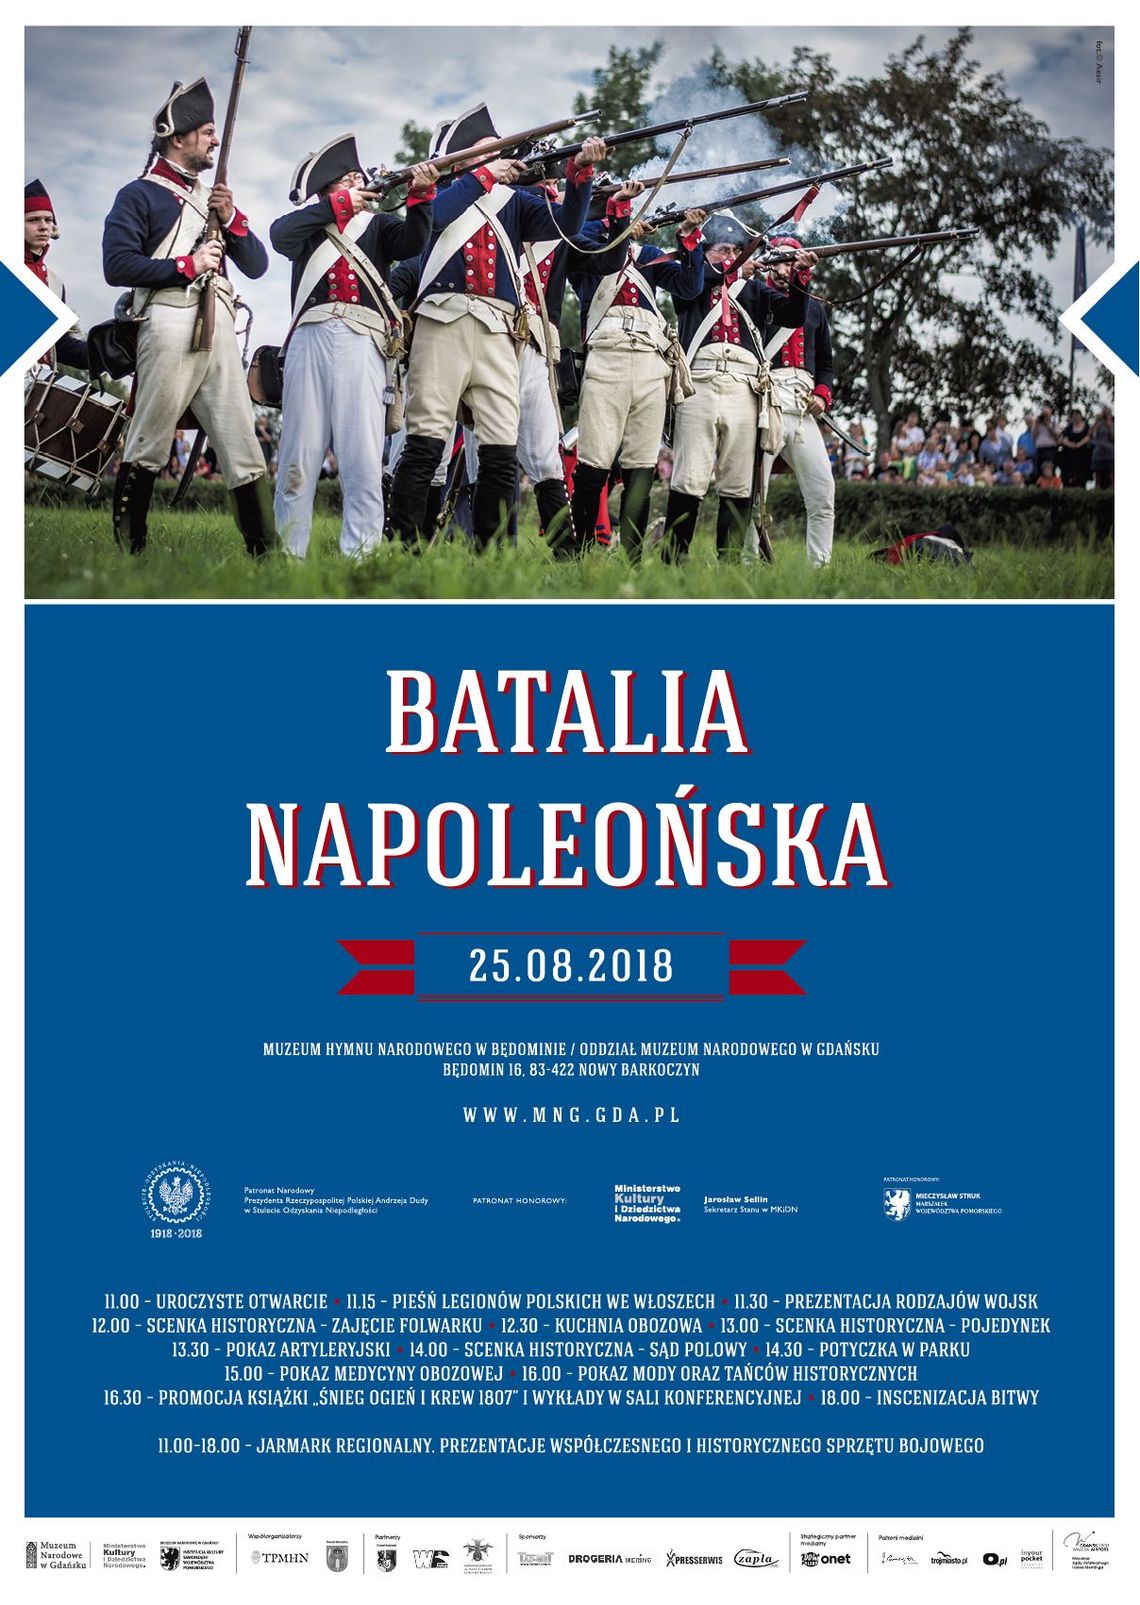 Batalia Napoleońska. Będomin 2018.